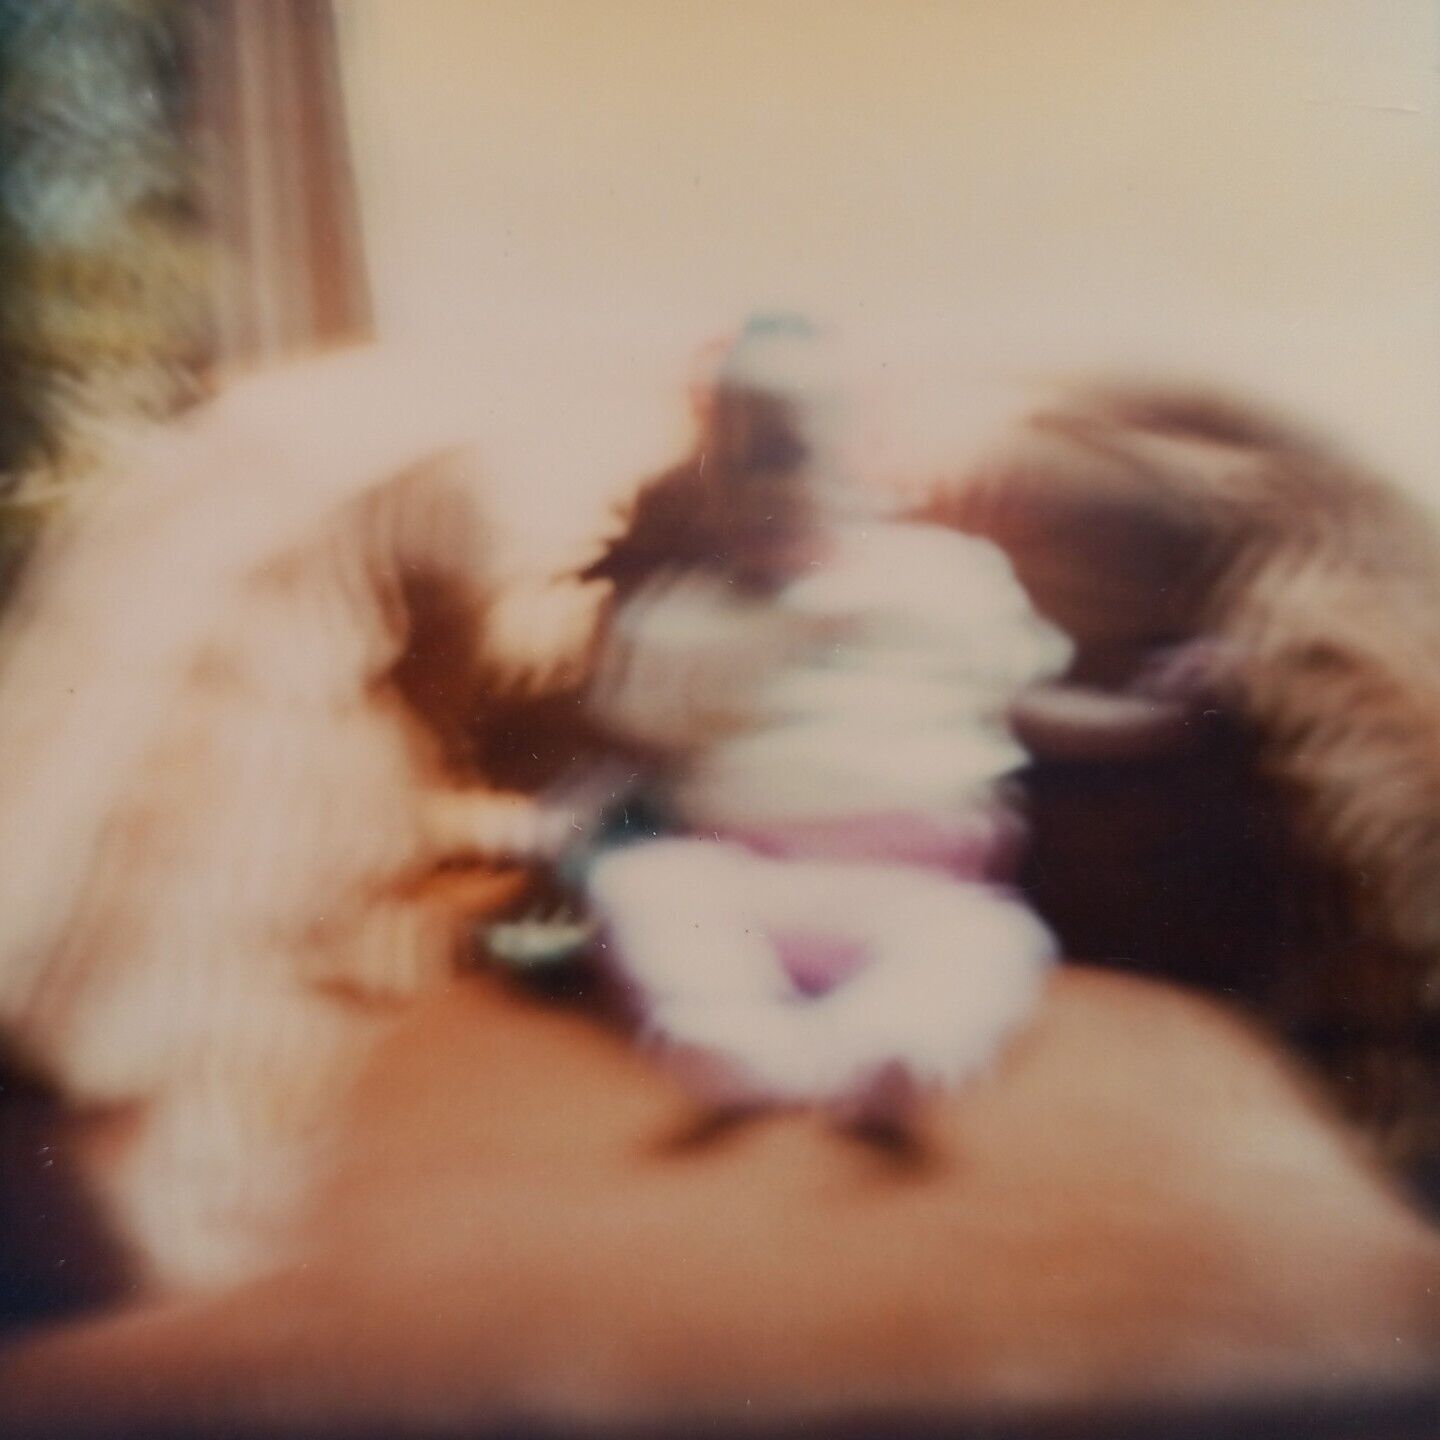 Vintage Polaroid Photo Surreal Child Ghosts Odd Light Blurry Found Art Snapshot